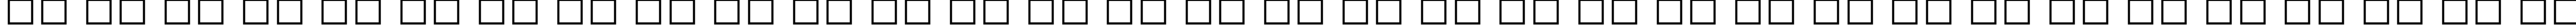 Пример написания русского алфавита шрифтом Rockwell Condensed Bold